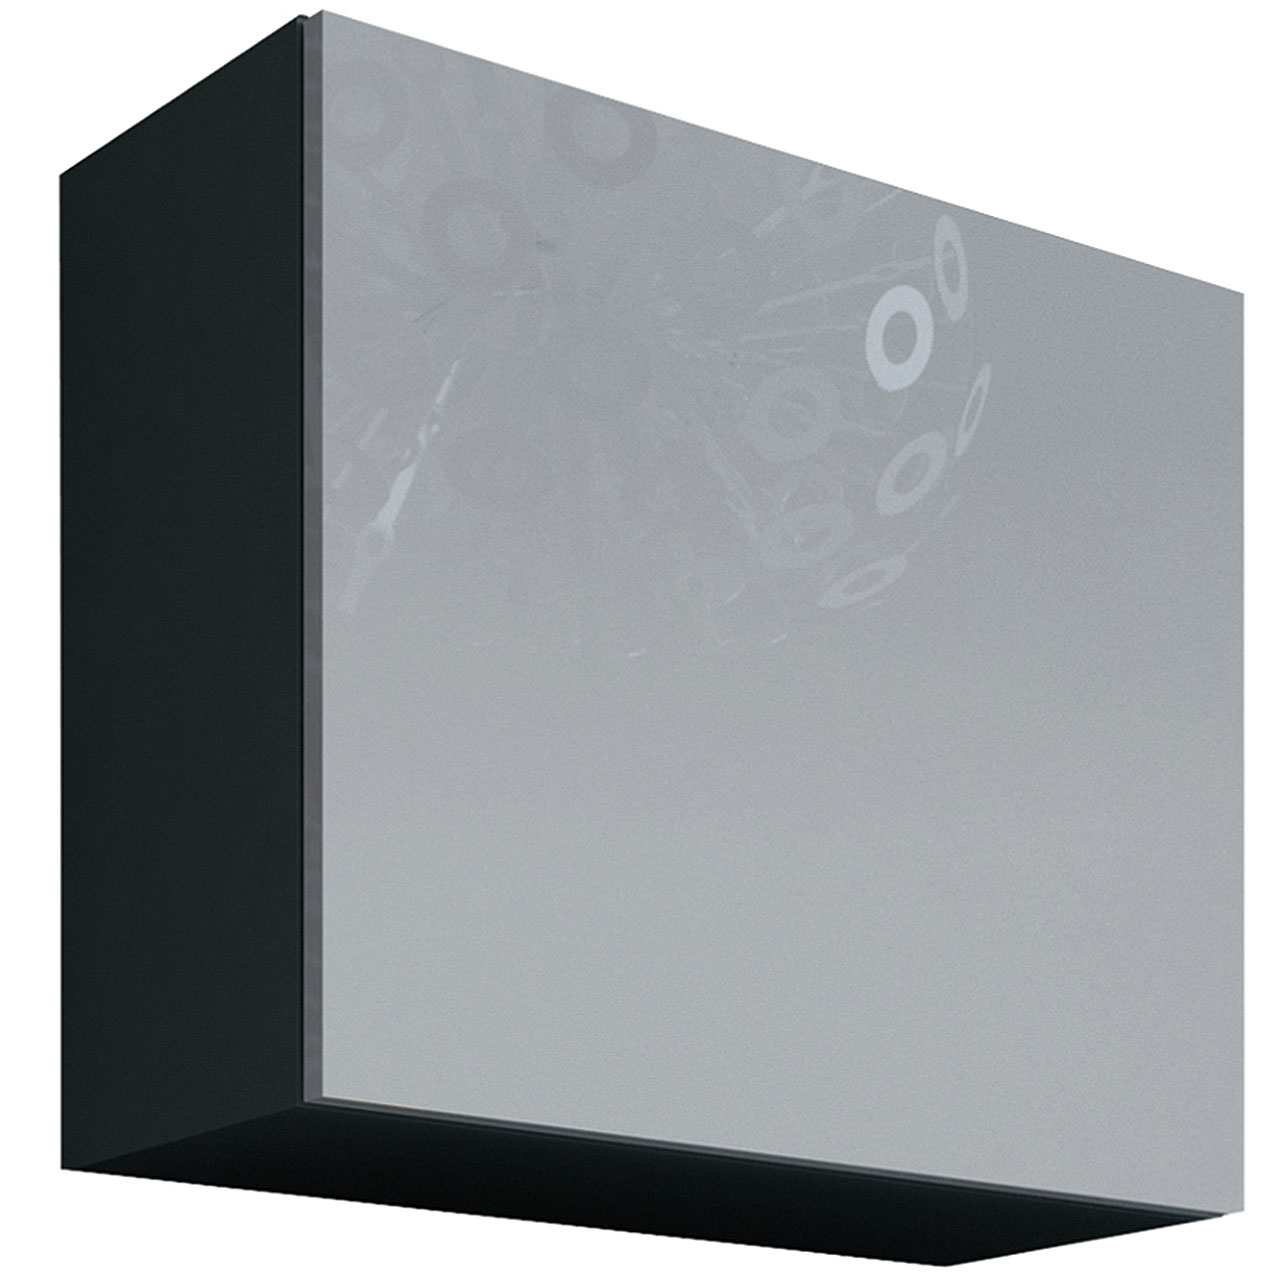 Závěsná skříňka VIGO GREY B KWADRAT VG10 šedá / bílý lesk